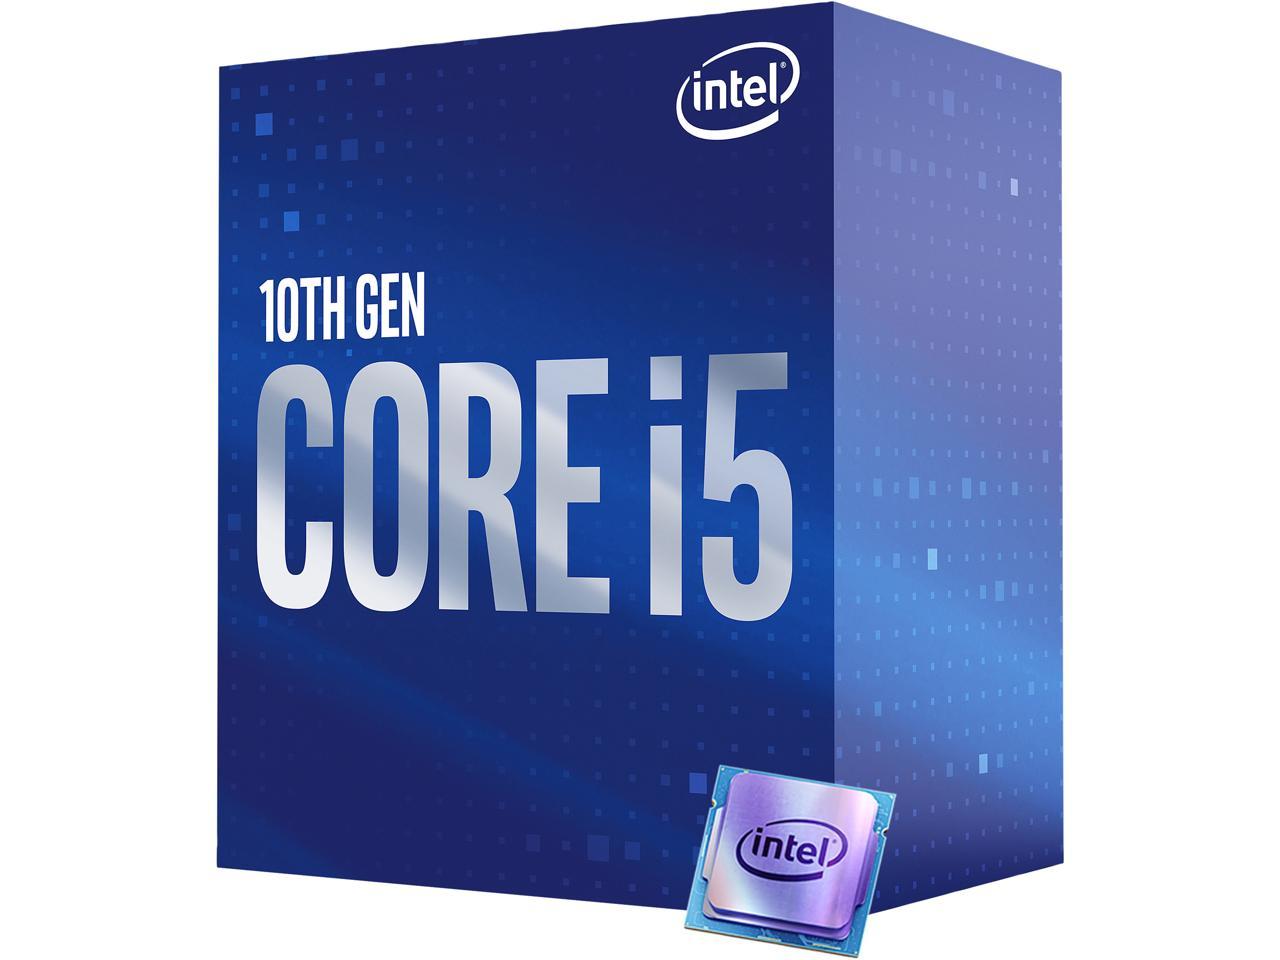 Intel Comet Lake Intel Core i5-10400 2.90Ghz 12MB Cache CPU